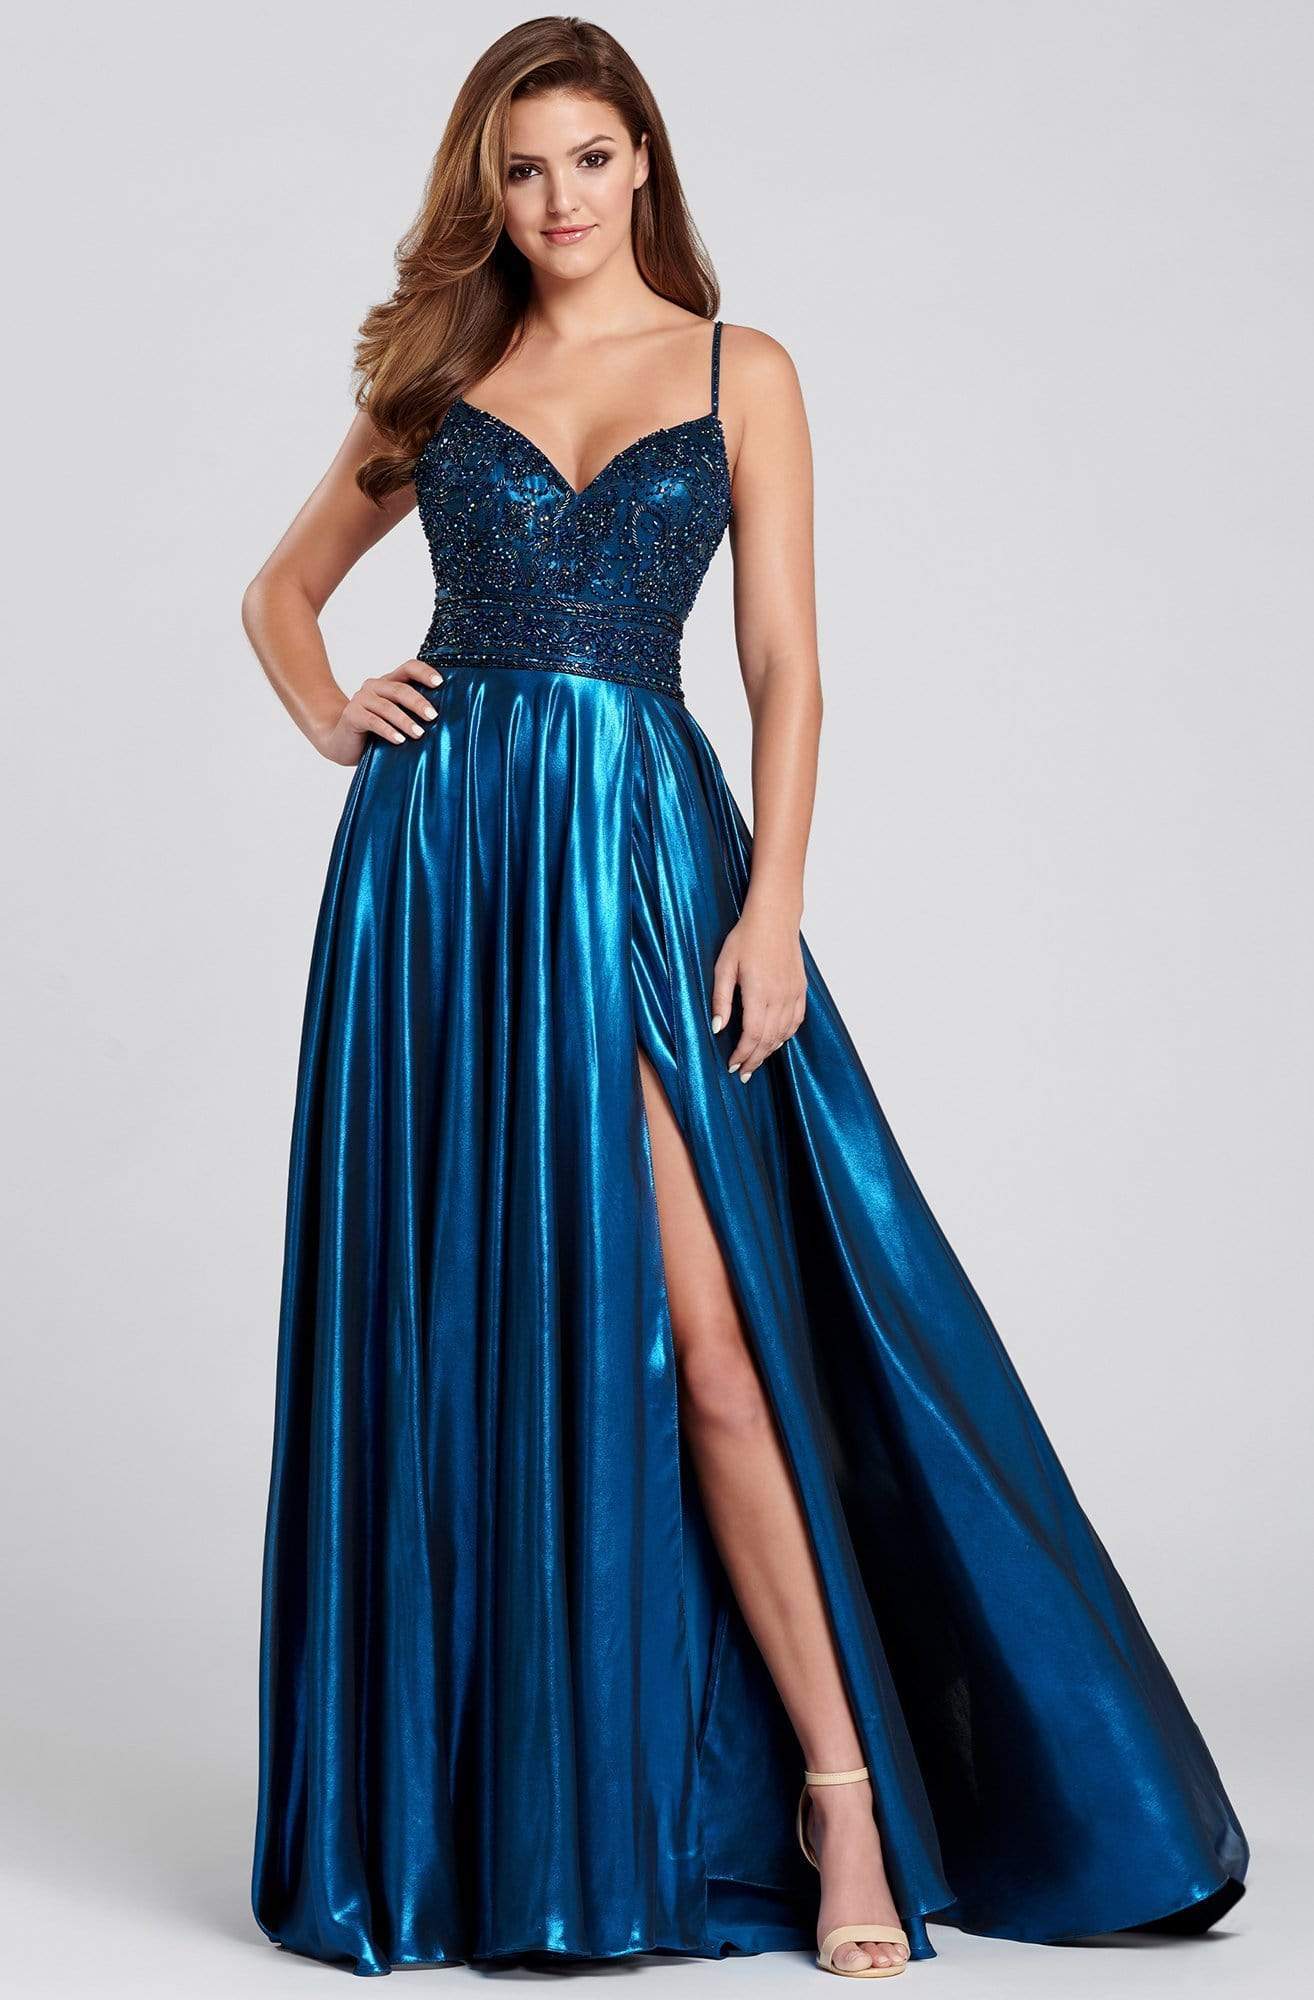 Ellie Wilde - Spaghetti Straps Beaded Bodice Ball Gown EW120107LSSC In Blue